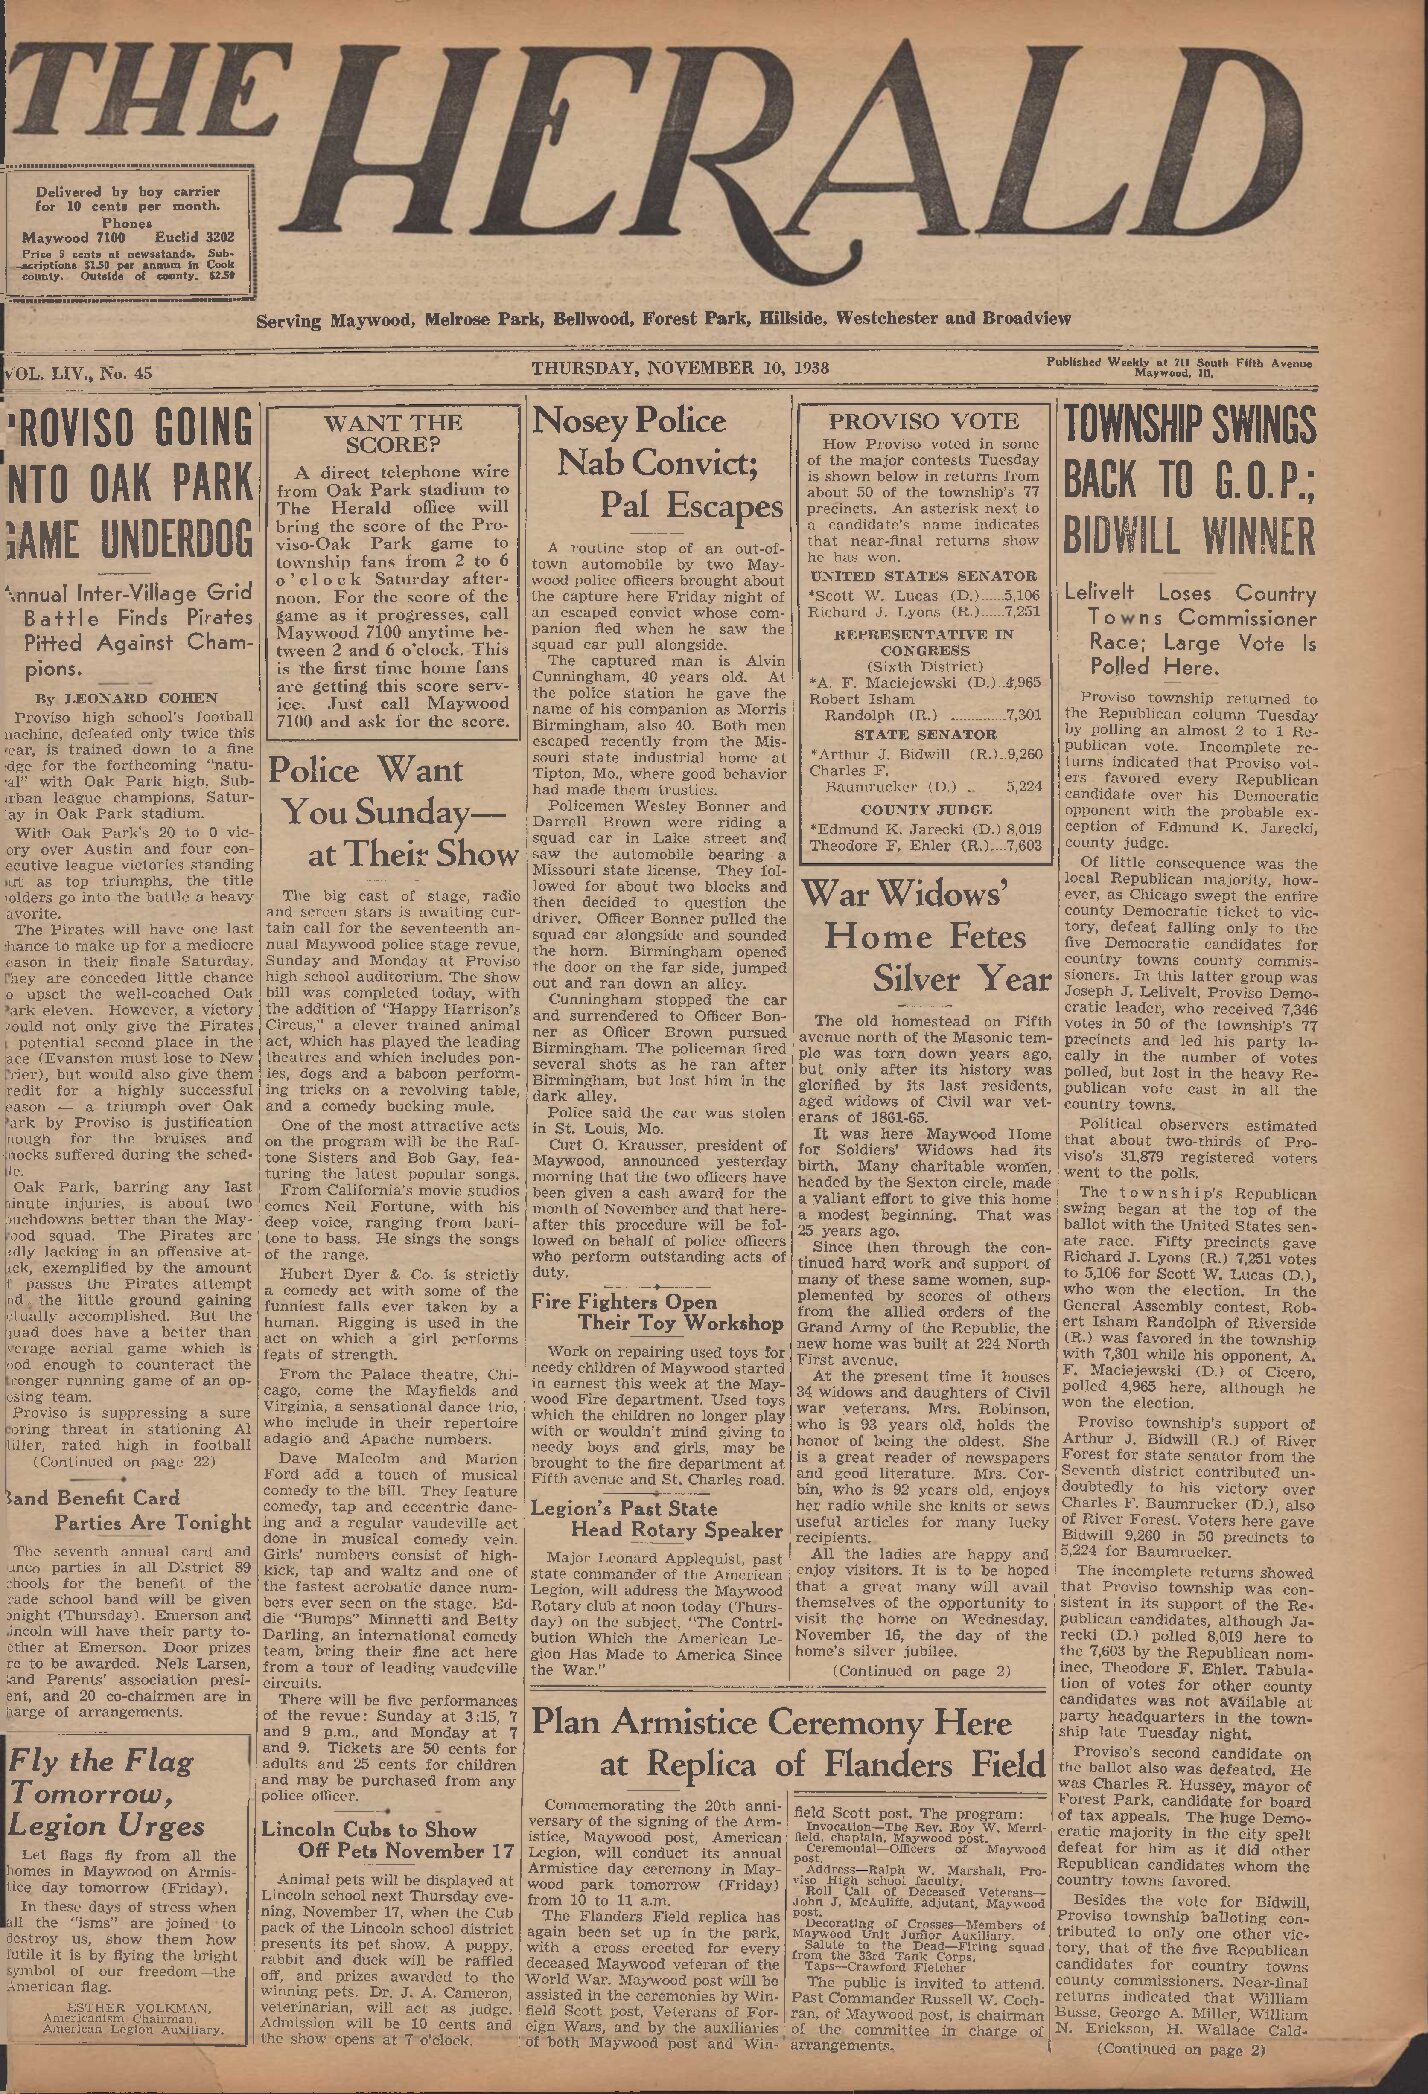 The Herald – 19381110